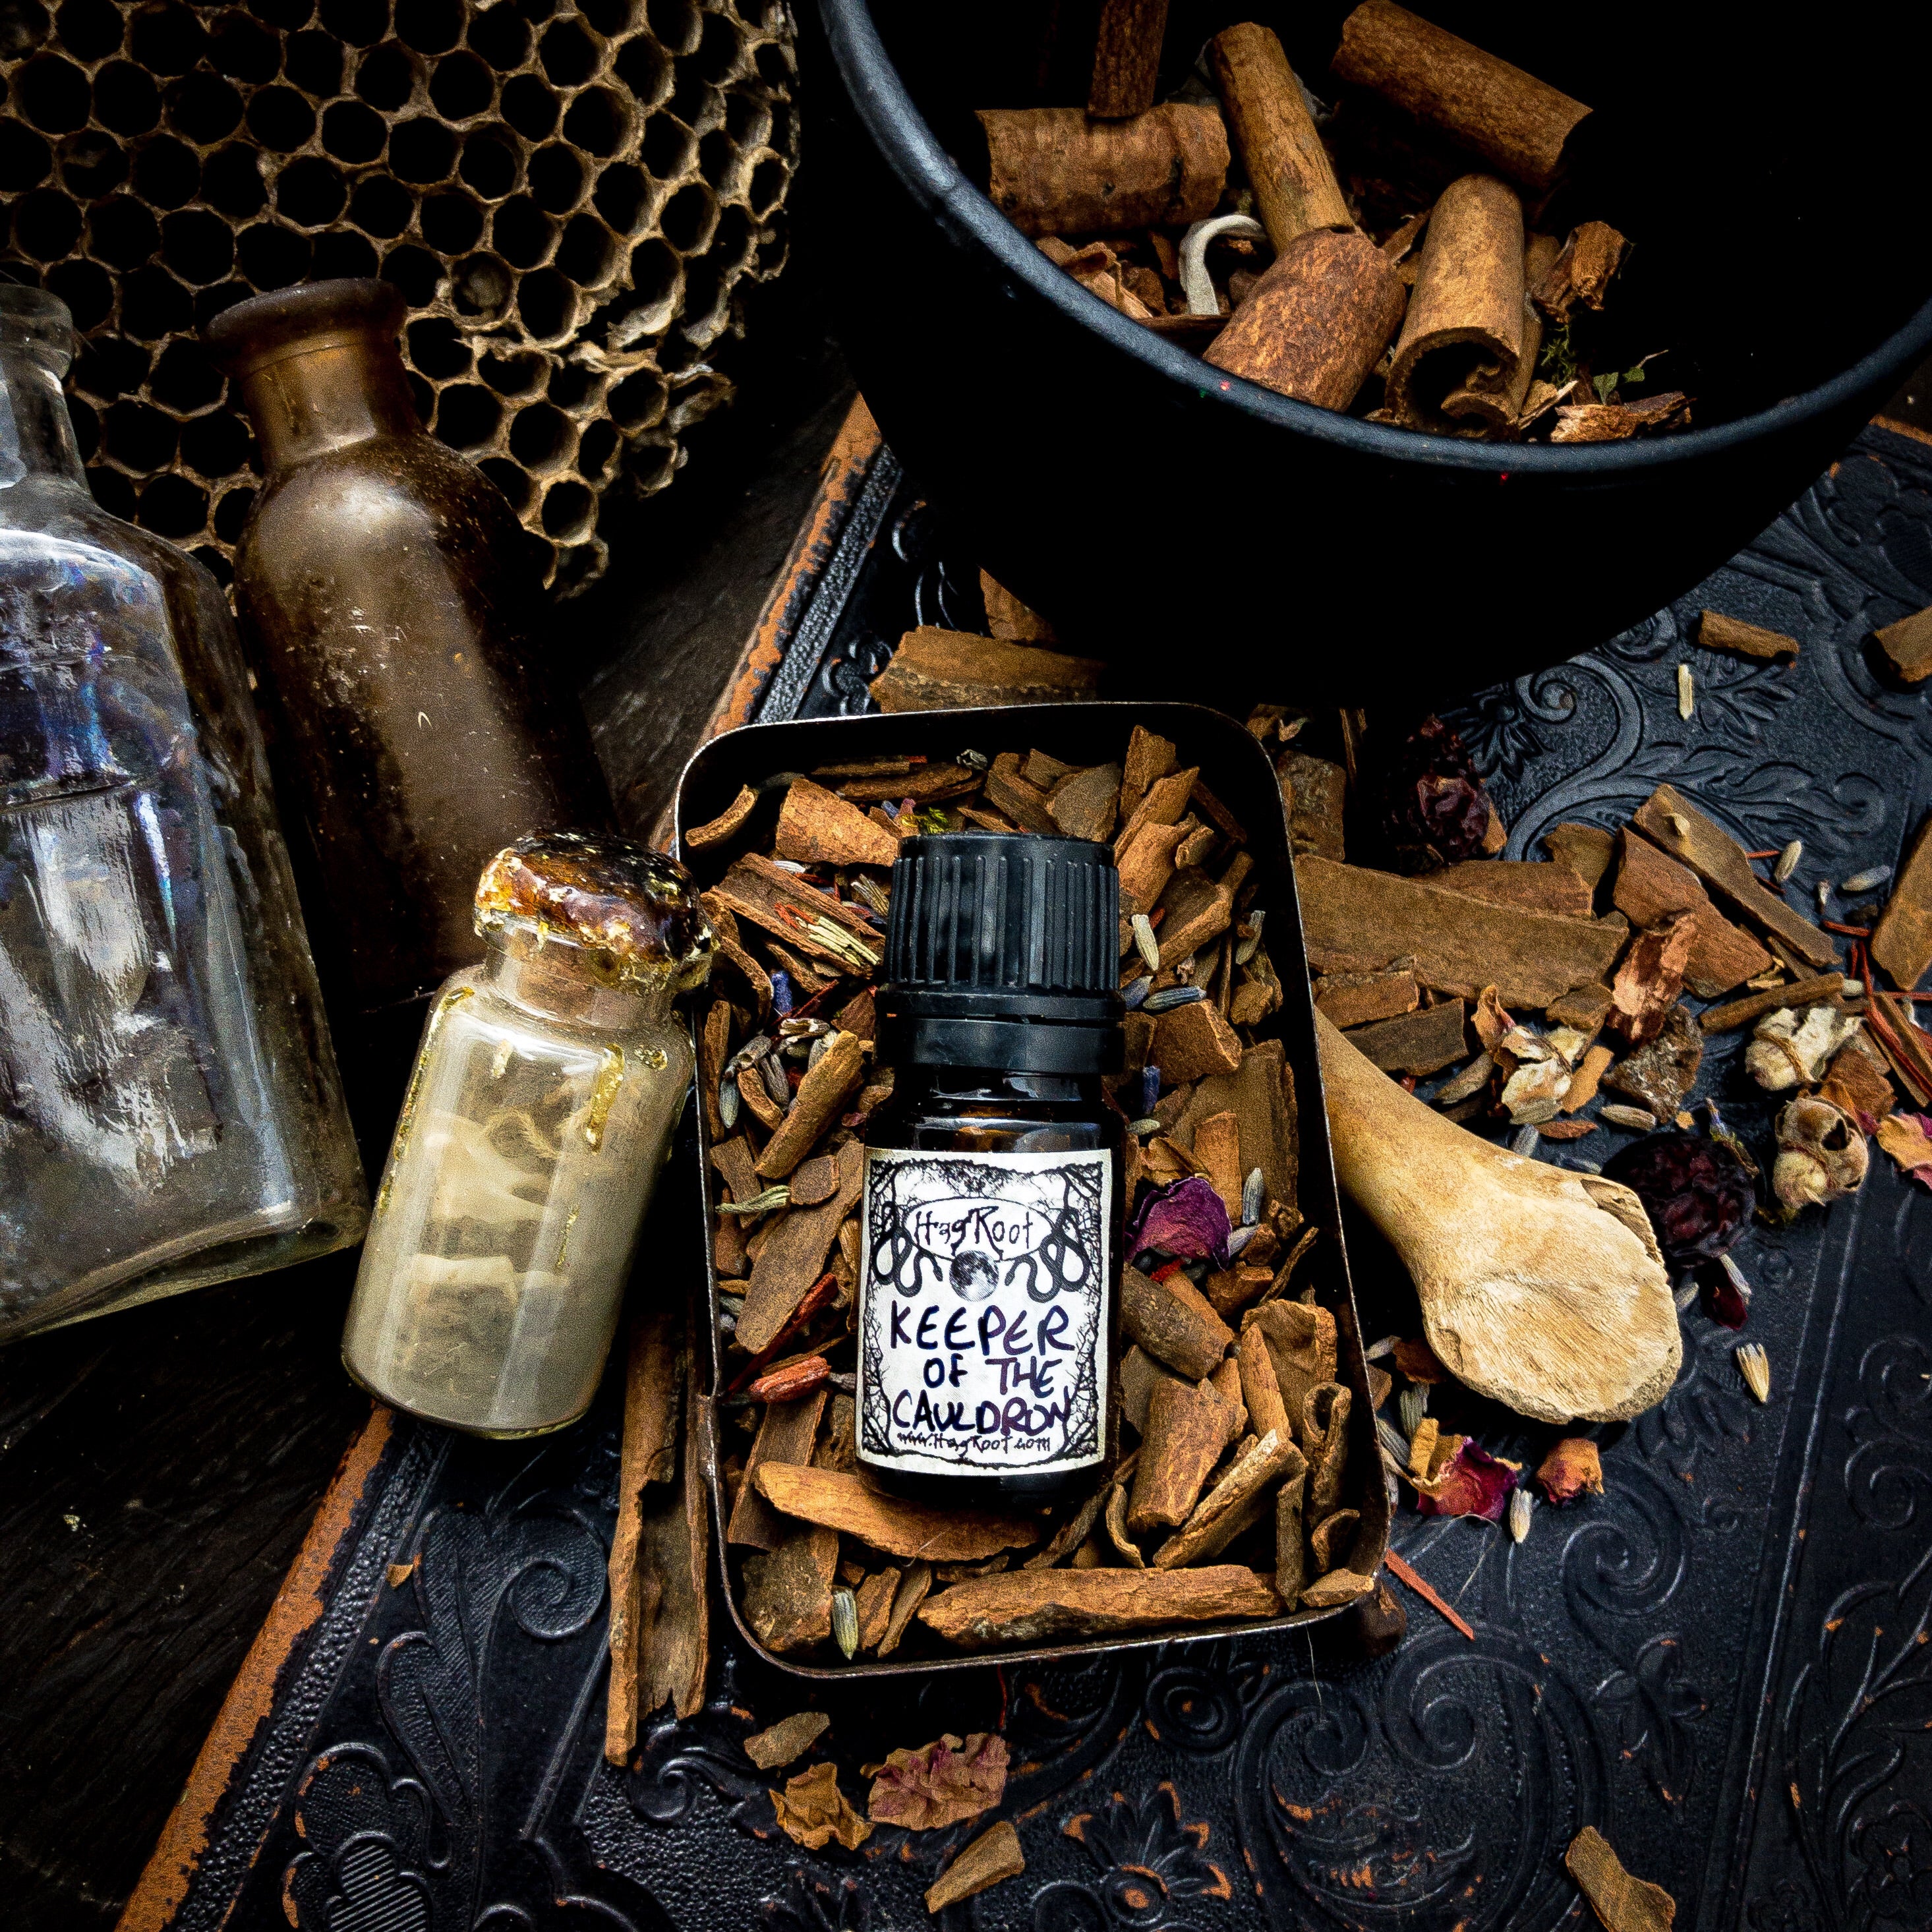 KEEPER OF THE CAULDRON-(Cinnamon, Dark Cocoa, Patchouli, Wood Smoke, Pumpkin, Oakmoss)-Perfume, Cologne, Anointing, Ritual Oil